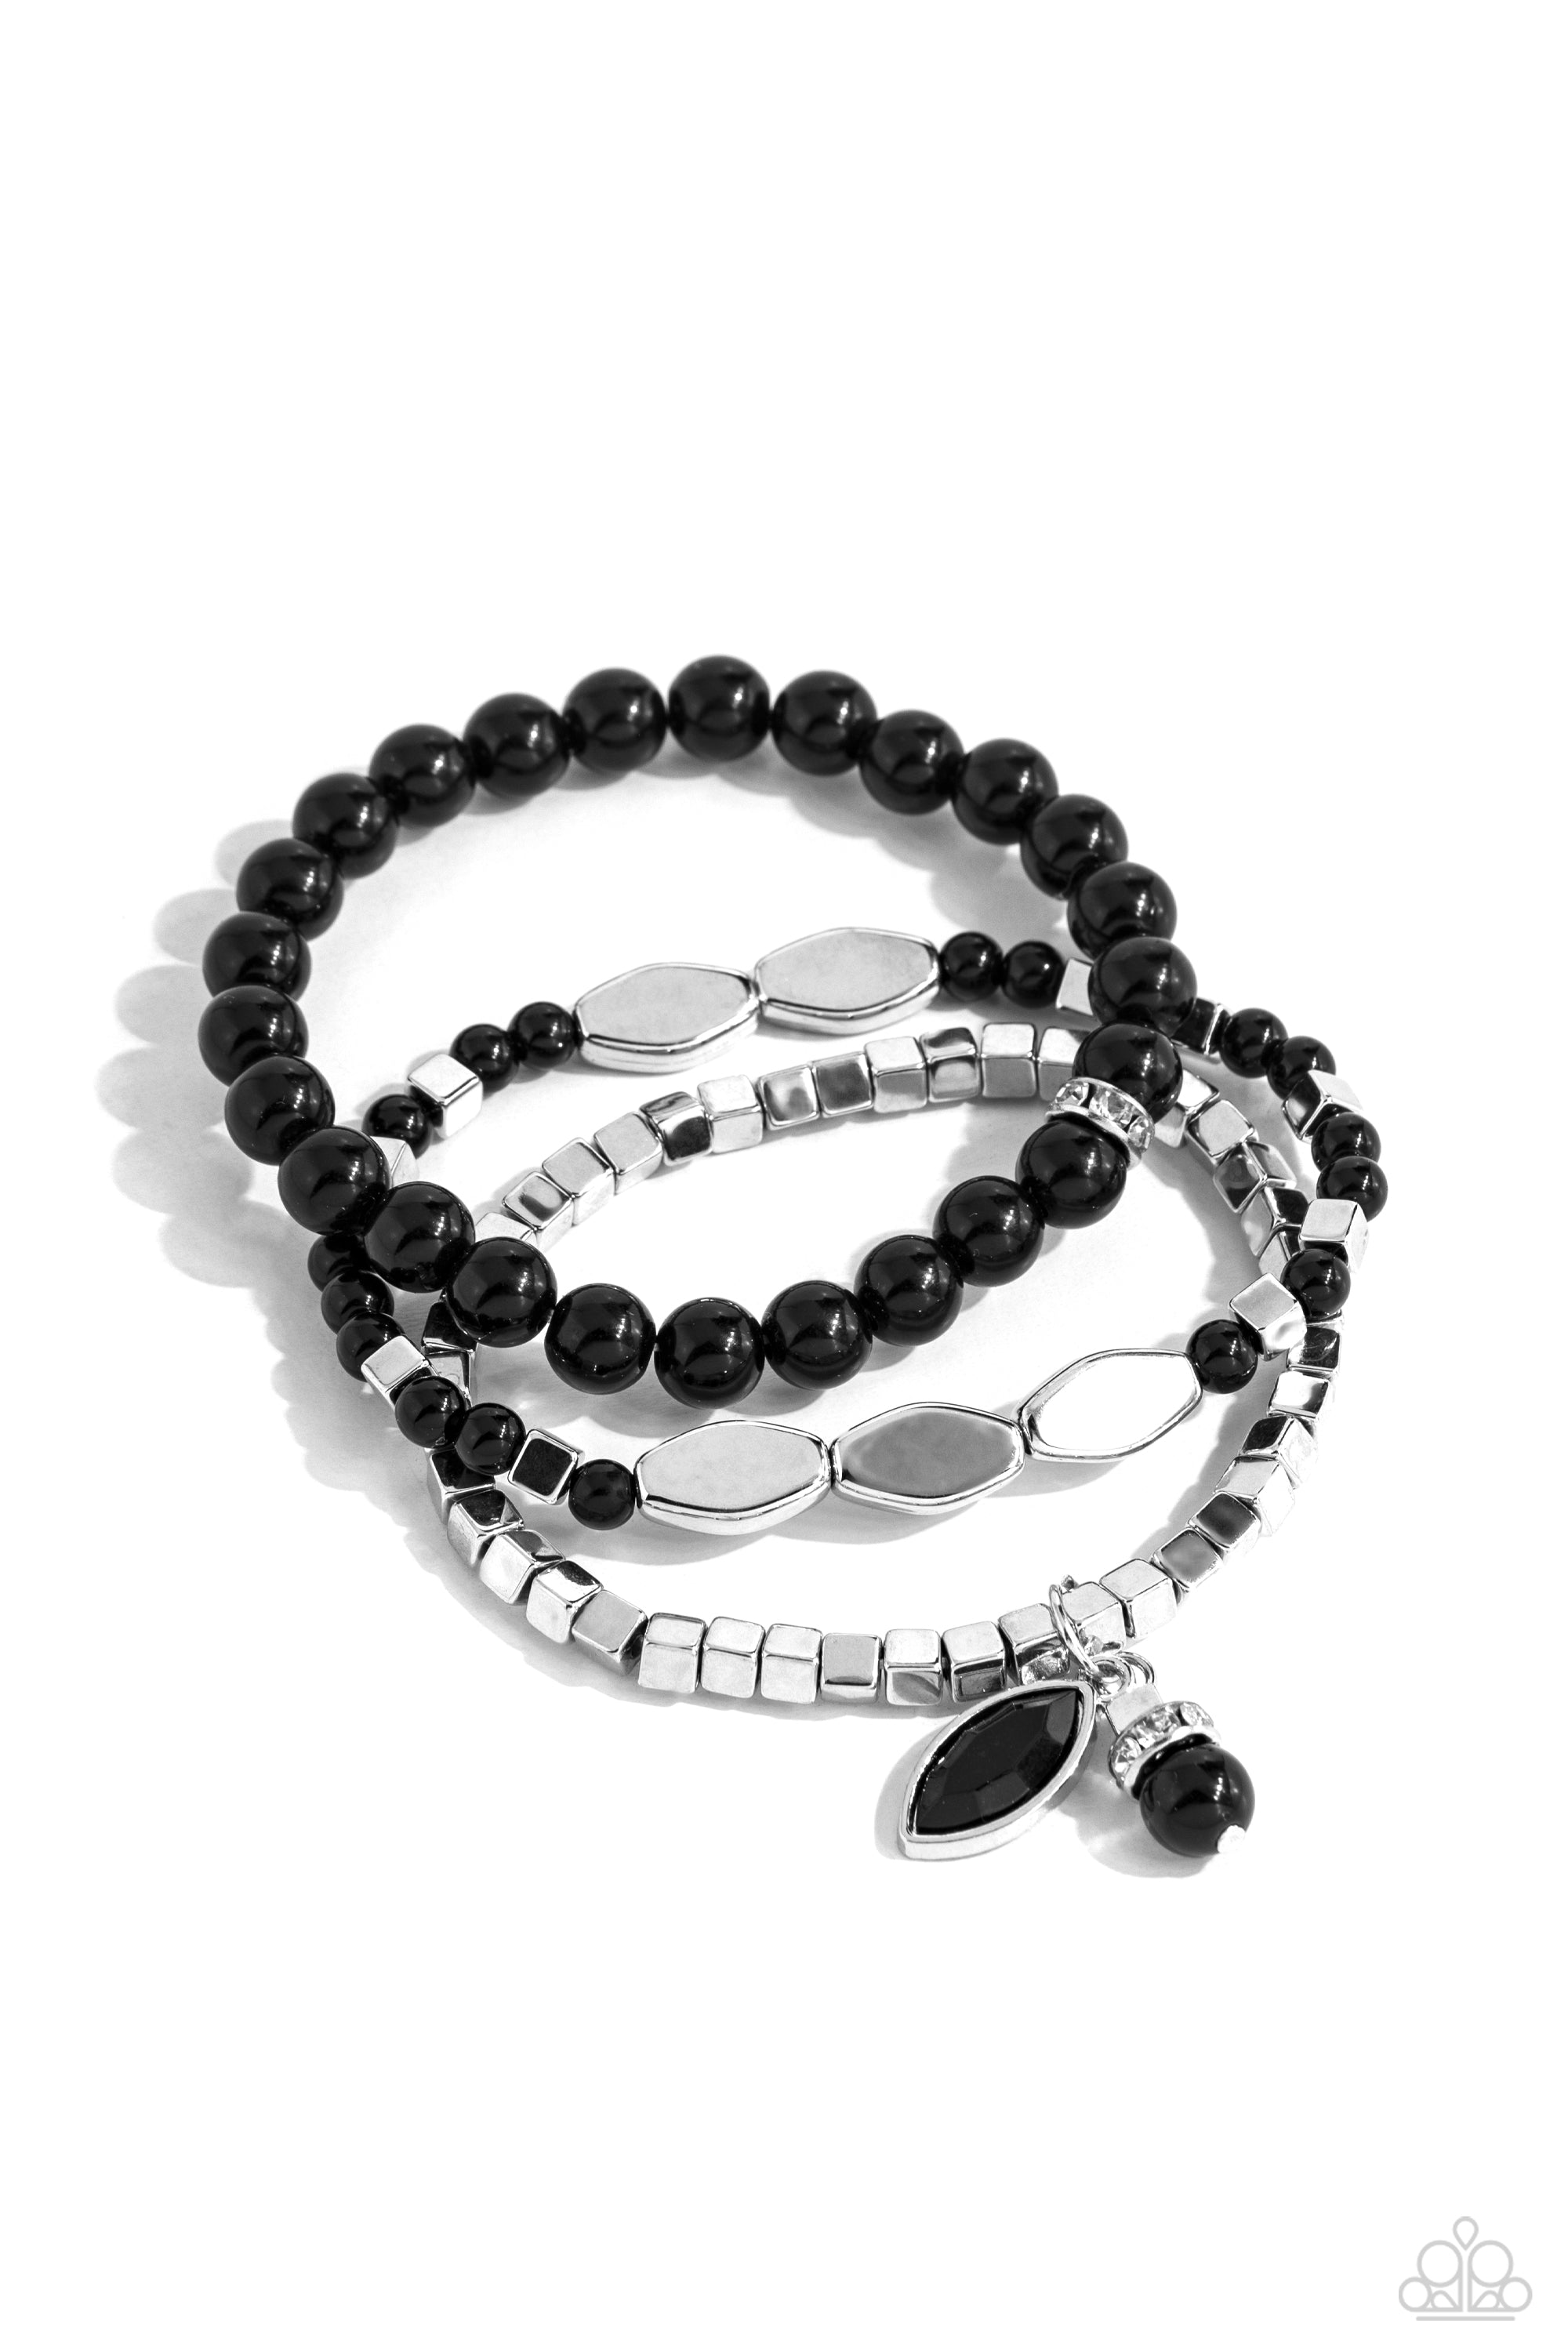 99 Black bead bracelet ideas